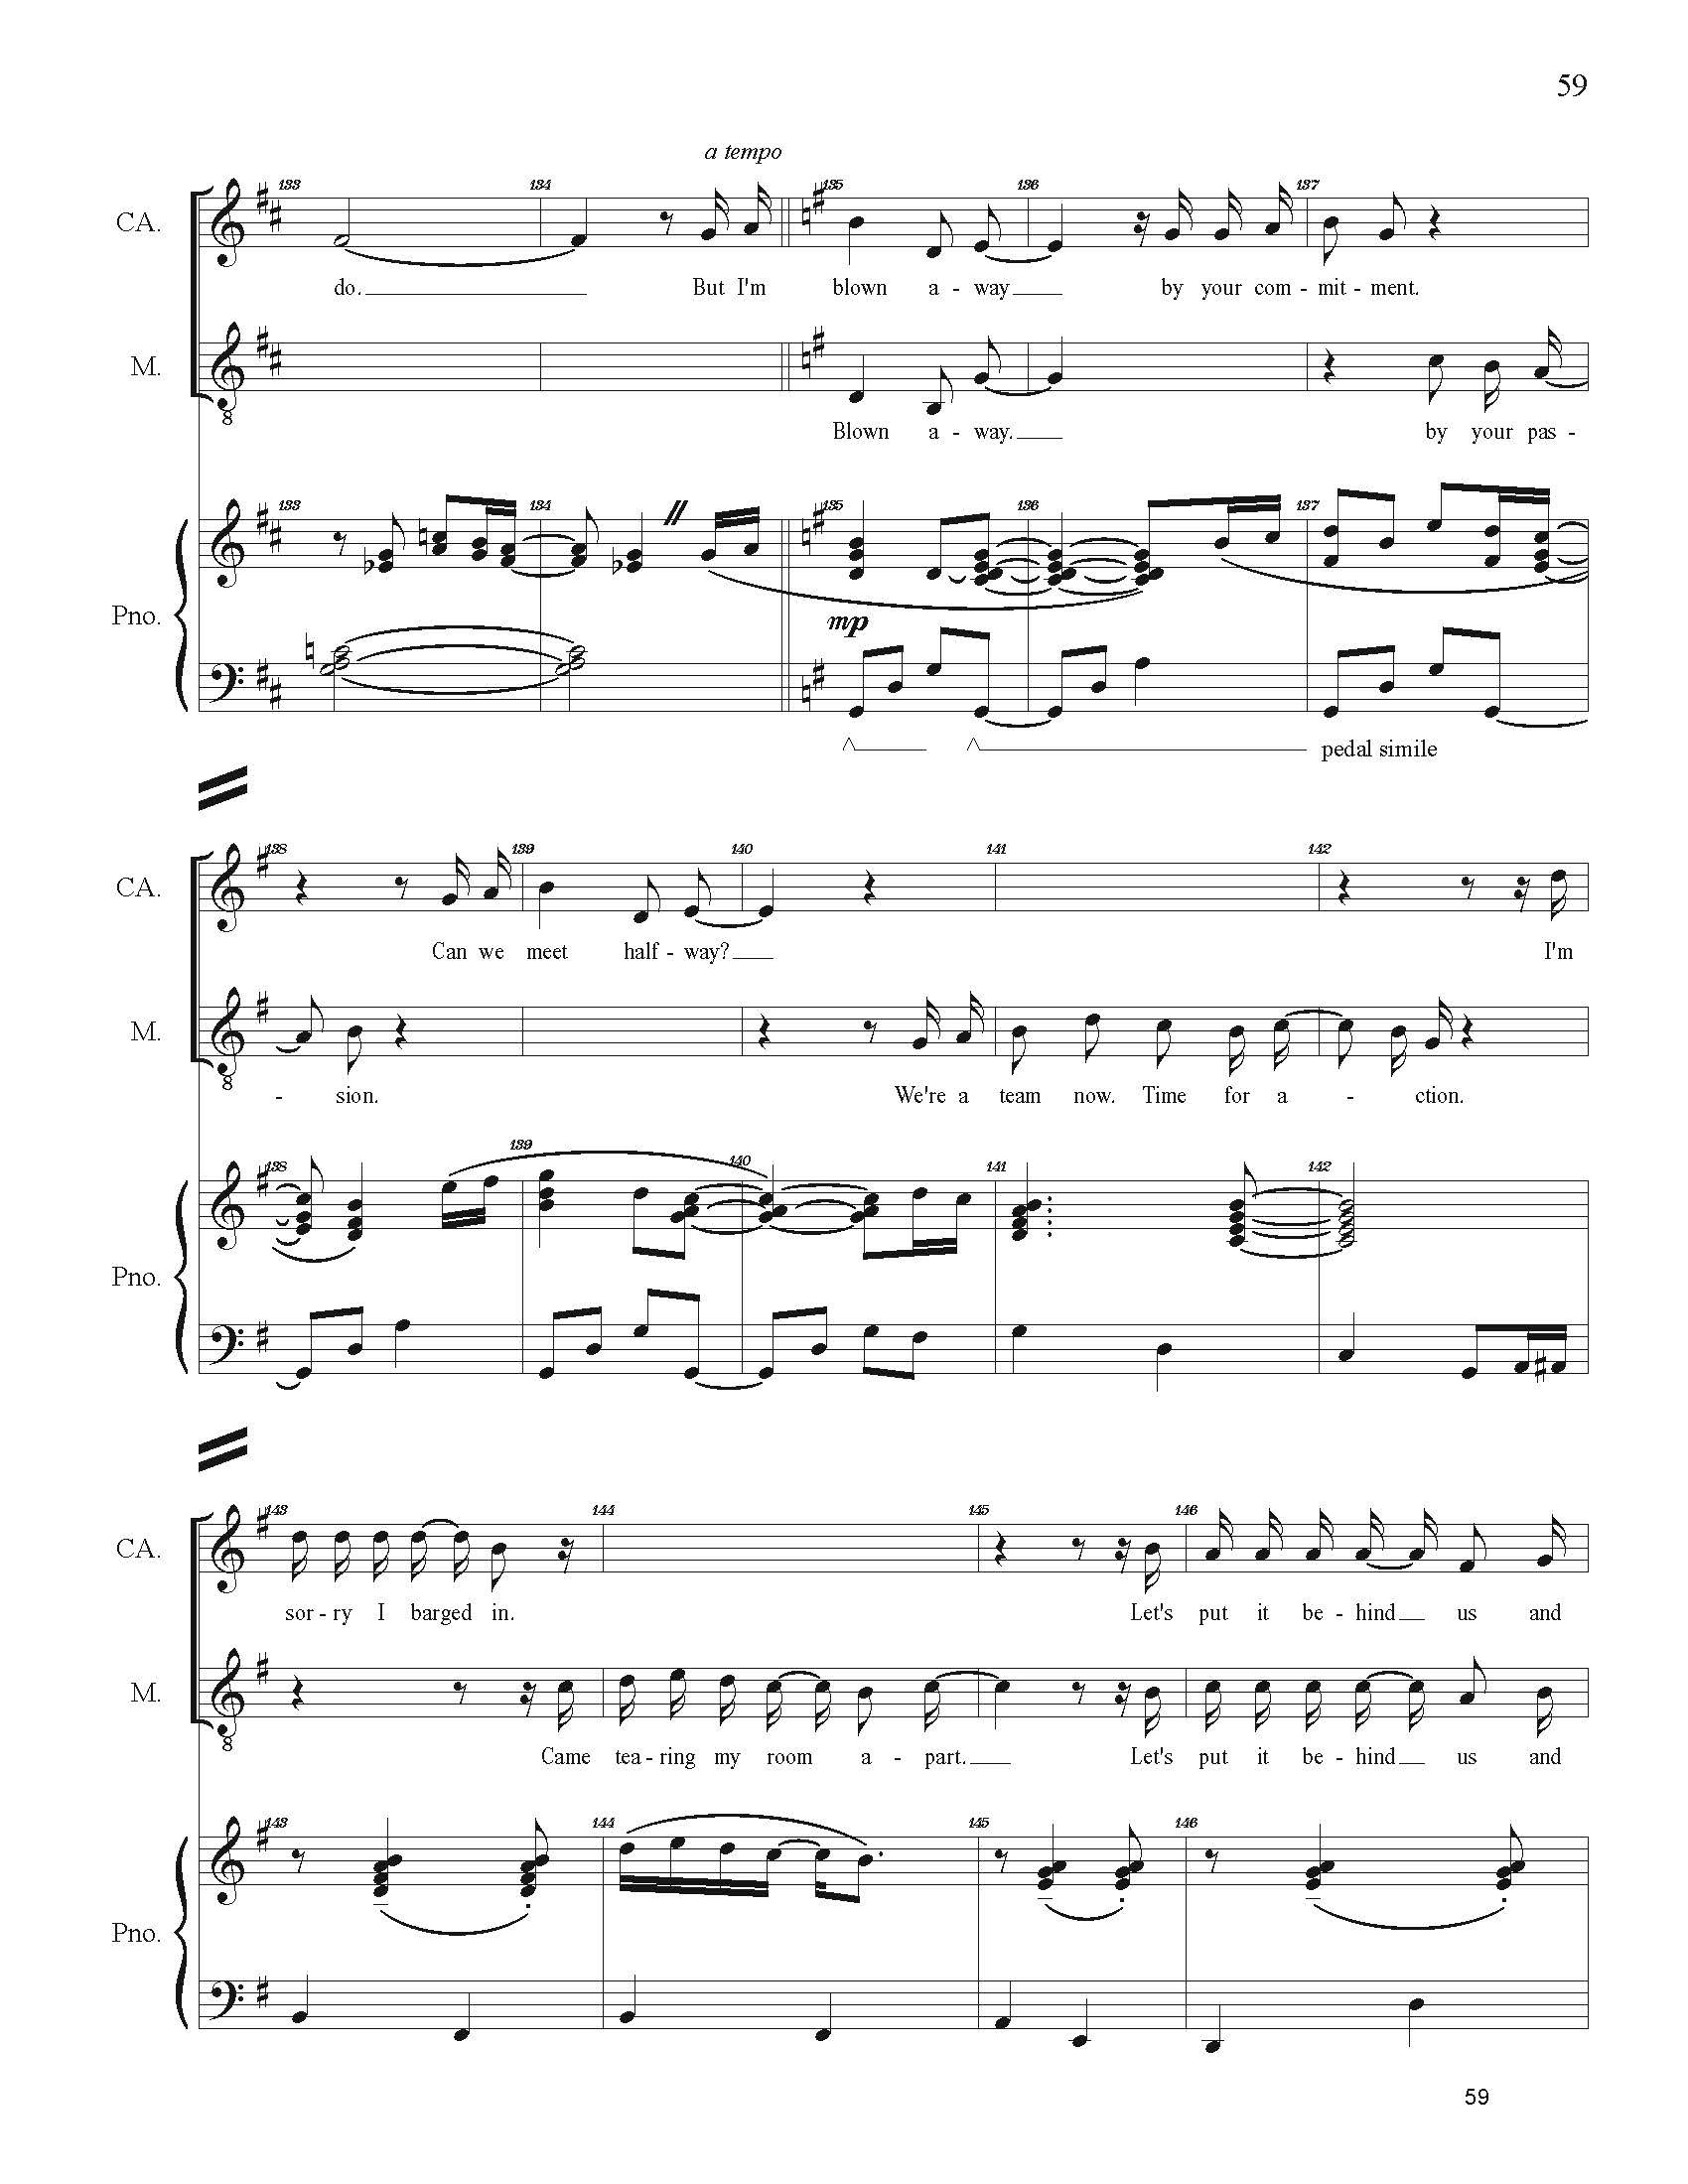 FULL PIANO VOCAL SCORE DRAFT 1 - Score_Page_059.jpg